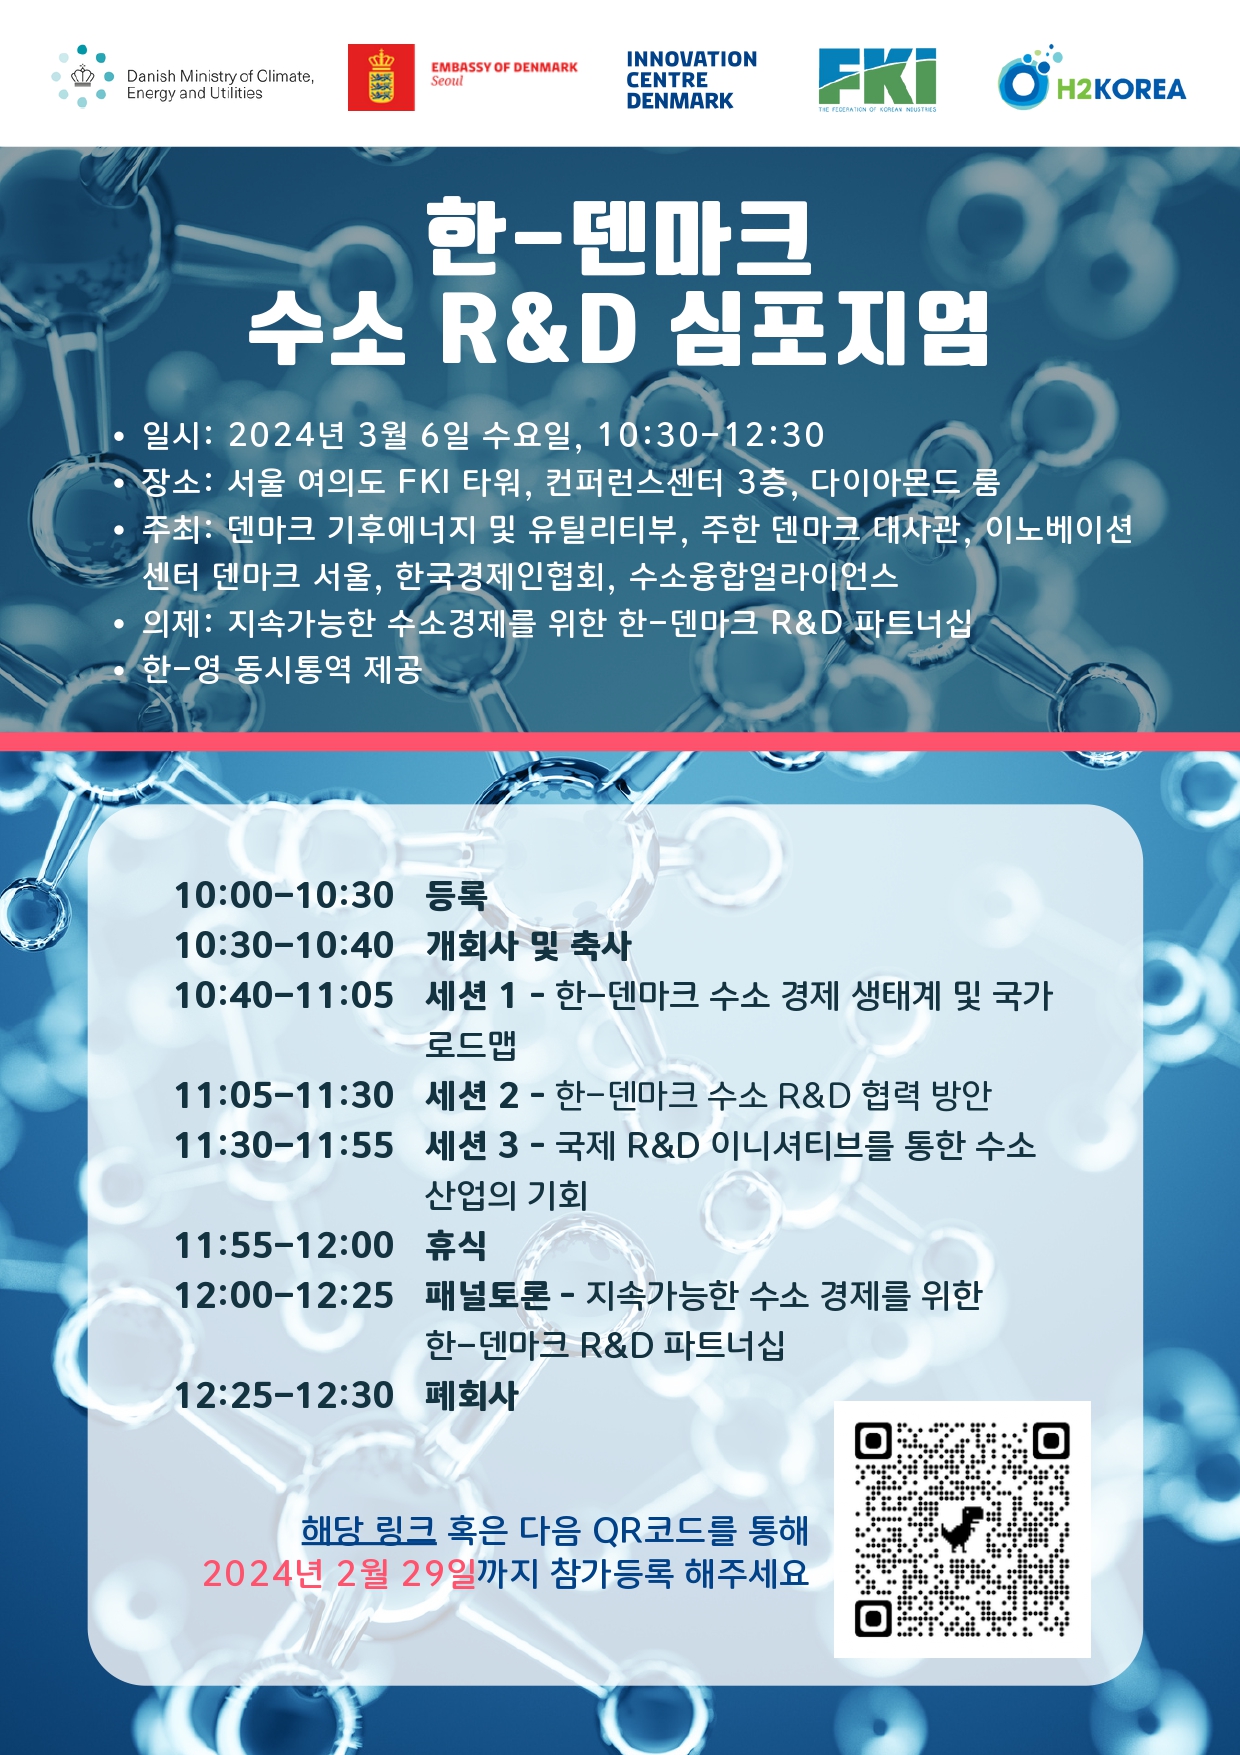 Invitation_Denmark-Korea Hydrogen R&amp;D Symposium (Mar 6)_page-0001.jpg